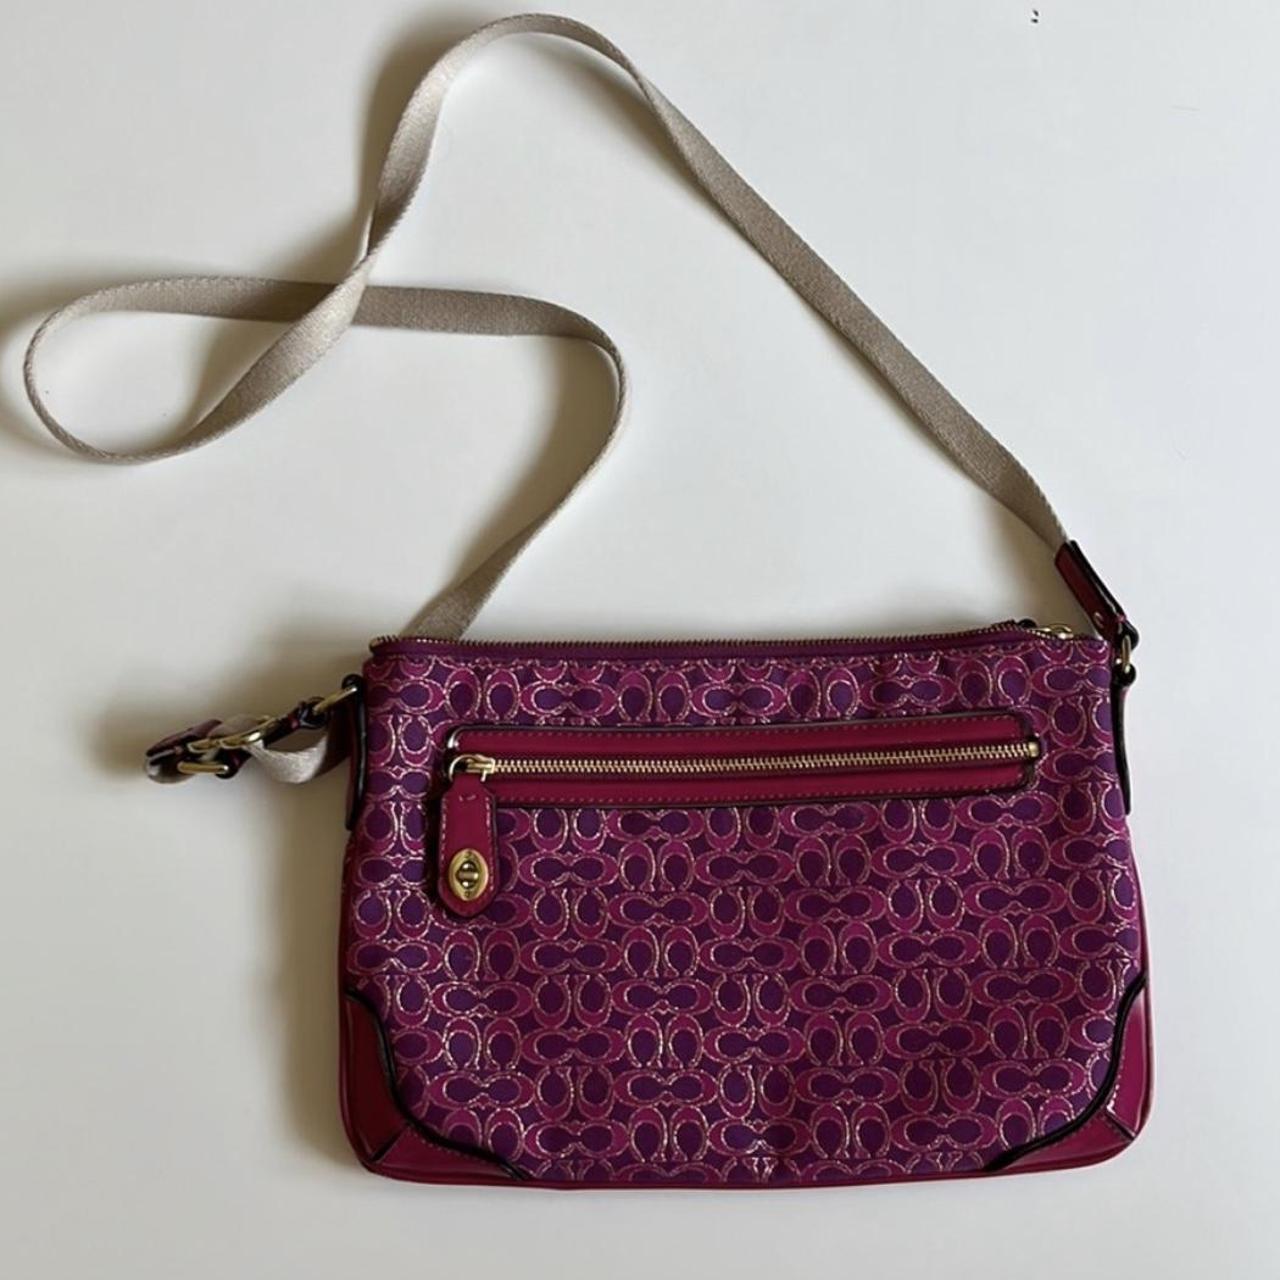 COACH Vintage DOTTED OP ART Ashley BERRY SILVER satchel handbag purse PURPLE  | eBay